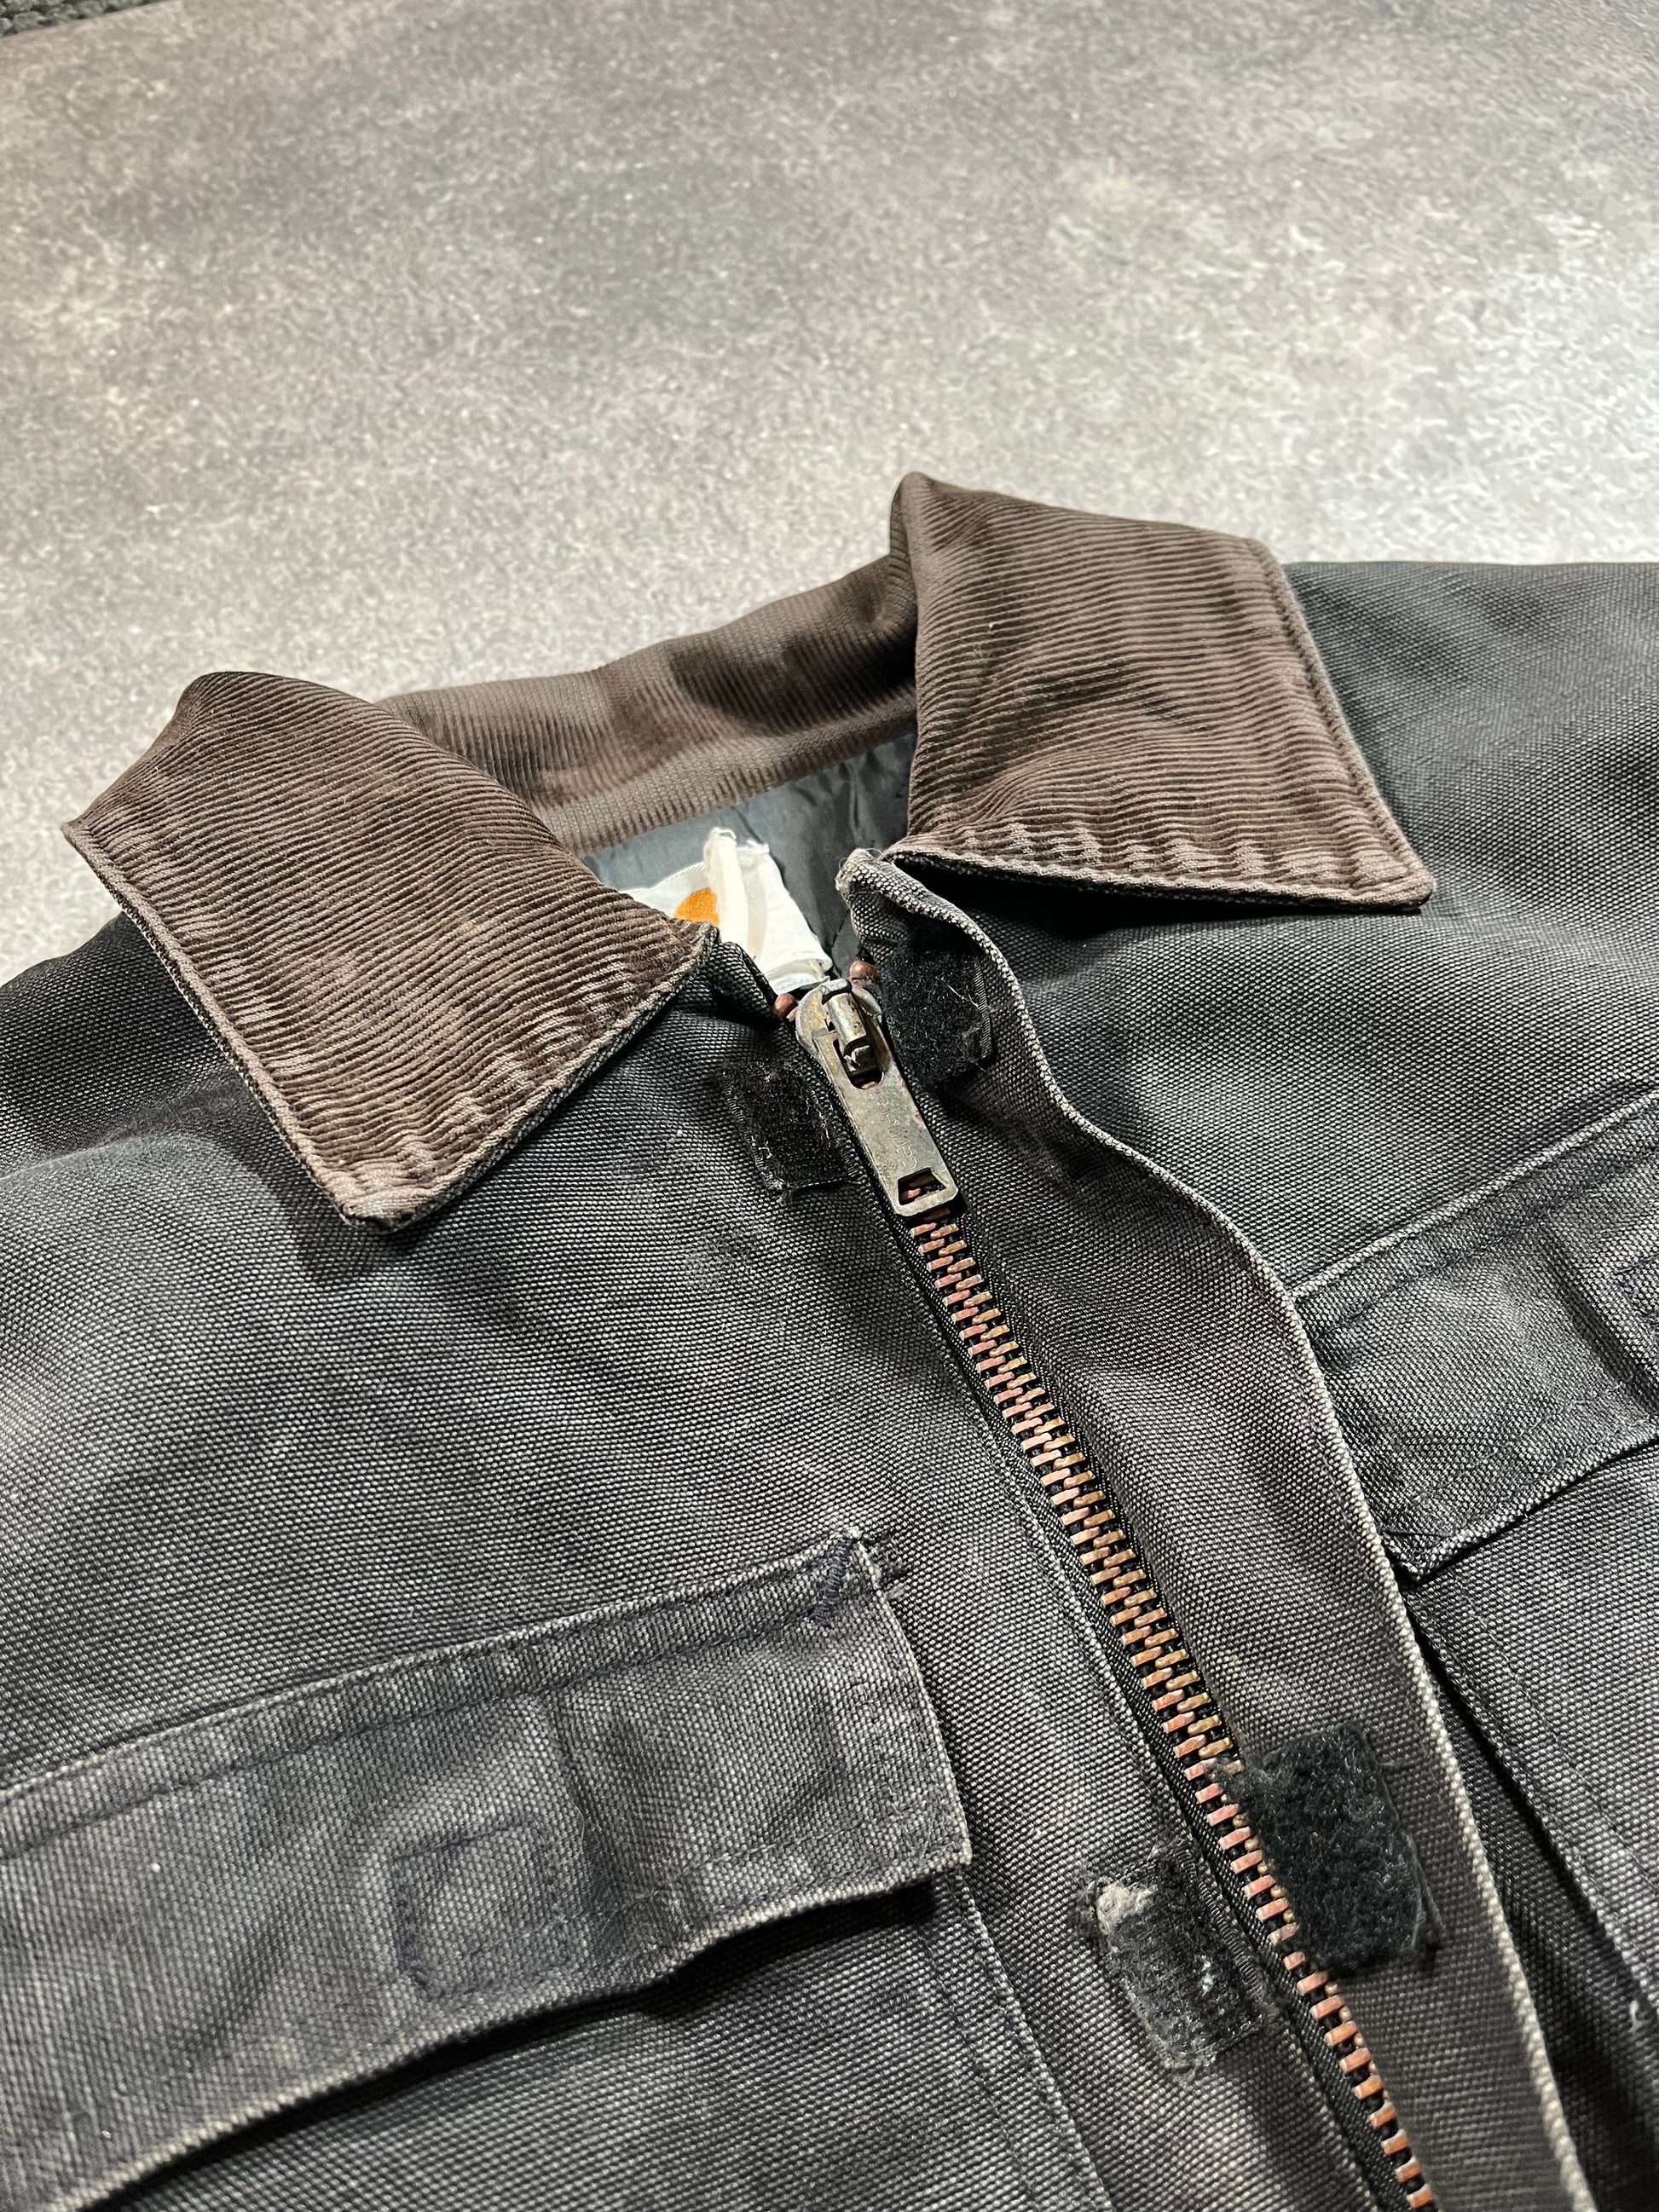 Carhartt Chore Coat Jacket Black // Small - RHAGHOUSE VINTAGE